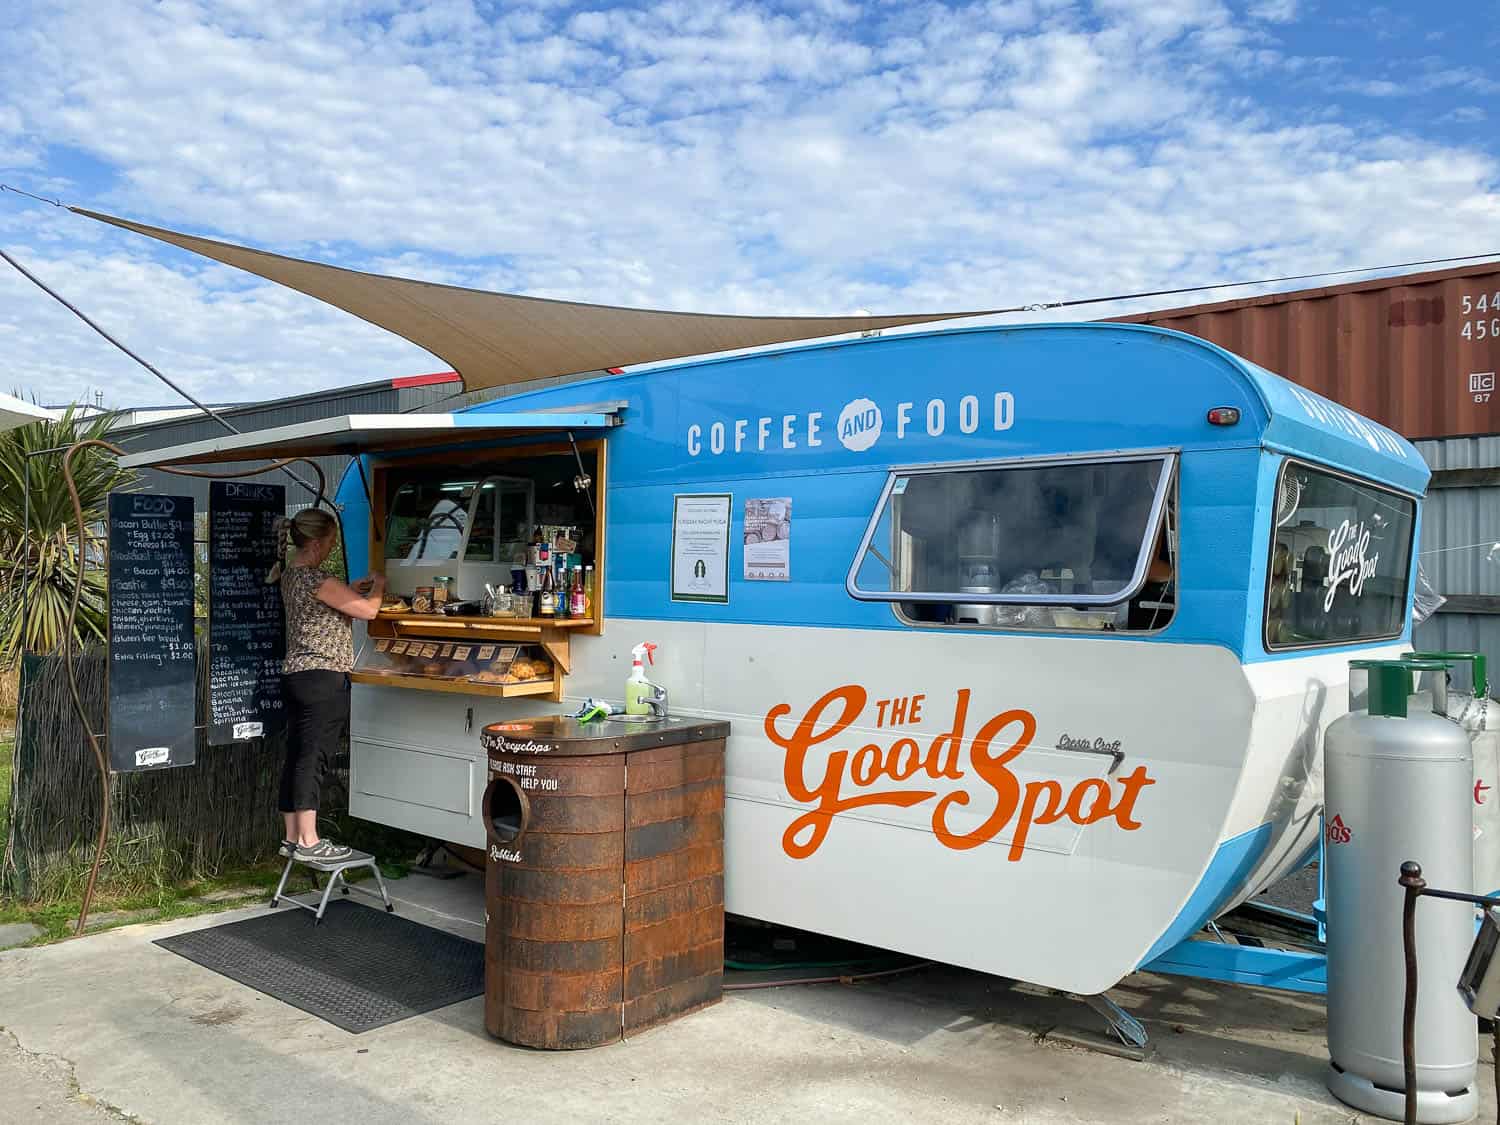 The Good Spot coffee cart in Wanaka, New Zealand